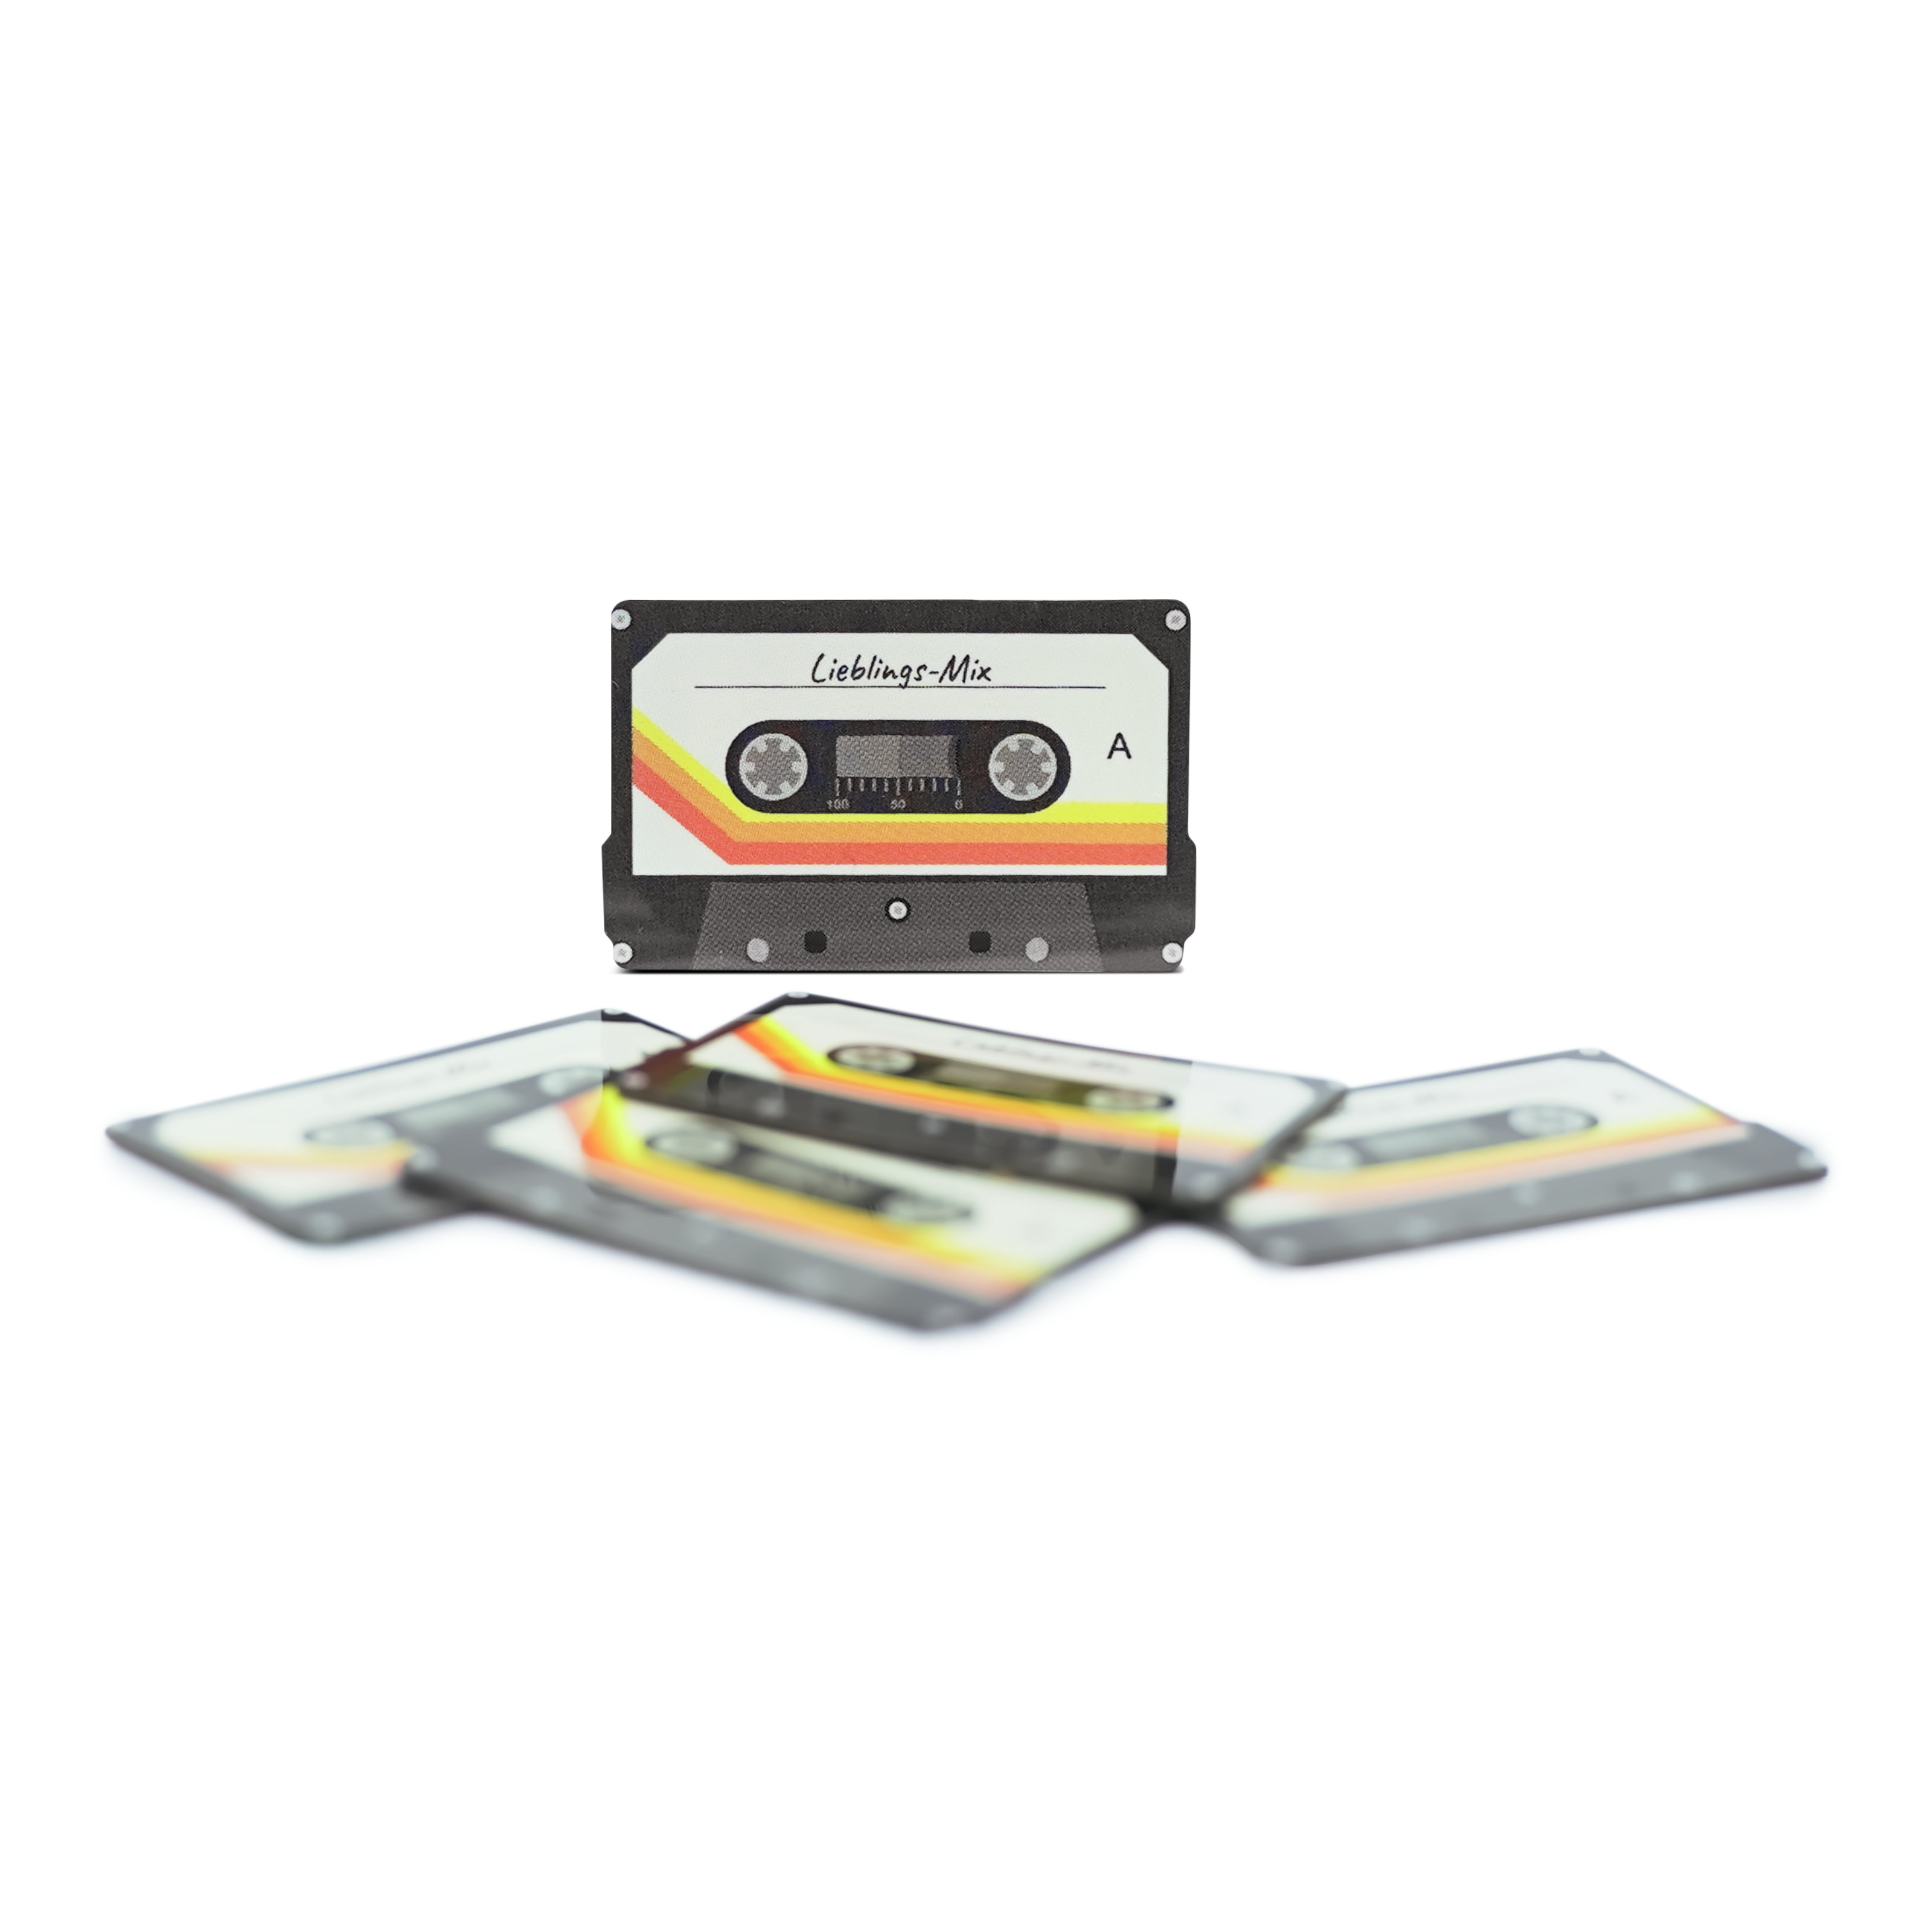 NFC Vibes Cassette - Digital music sticker - PET - 35 x 22 mm - black / white / orange - German label